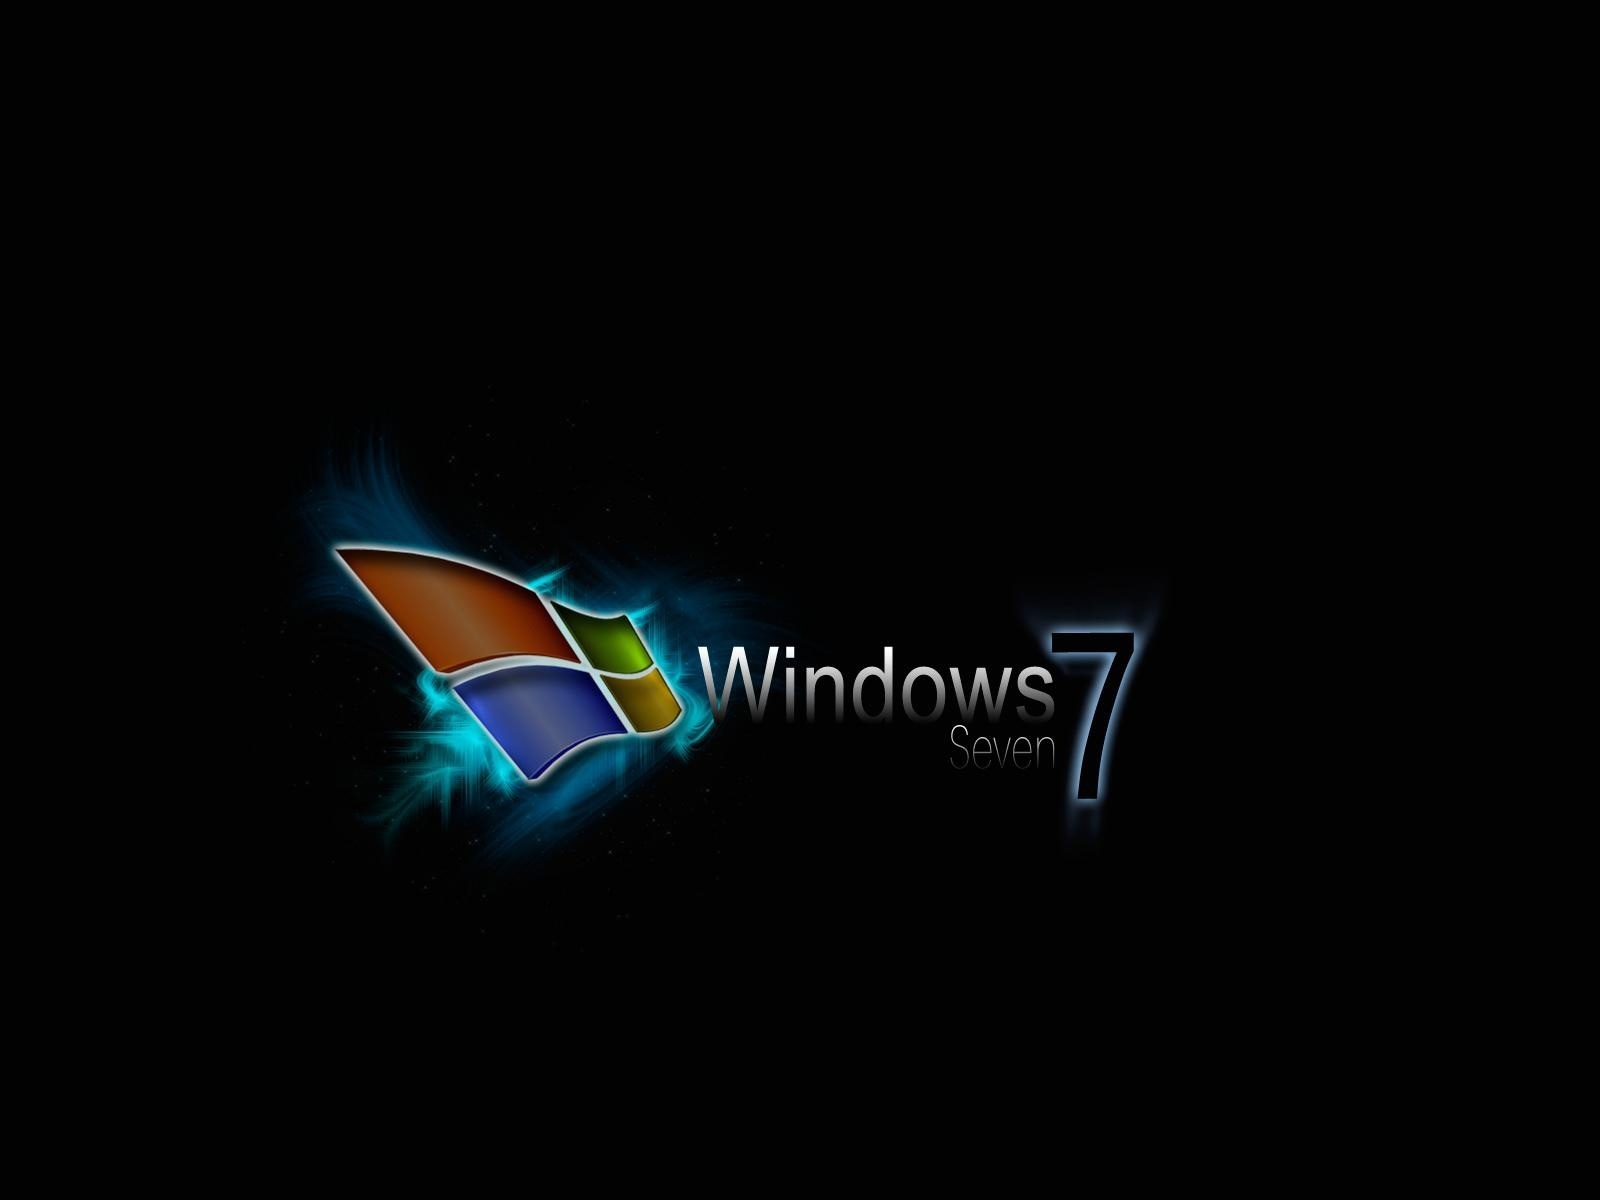 Best Windows 7 for 1600 x 1200 resolution